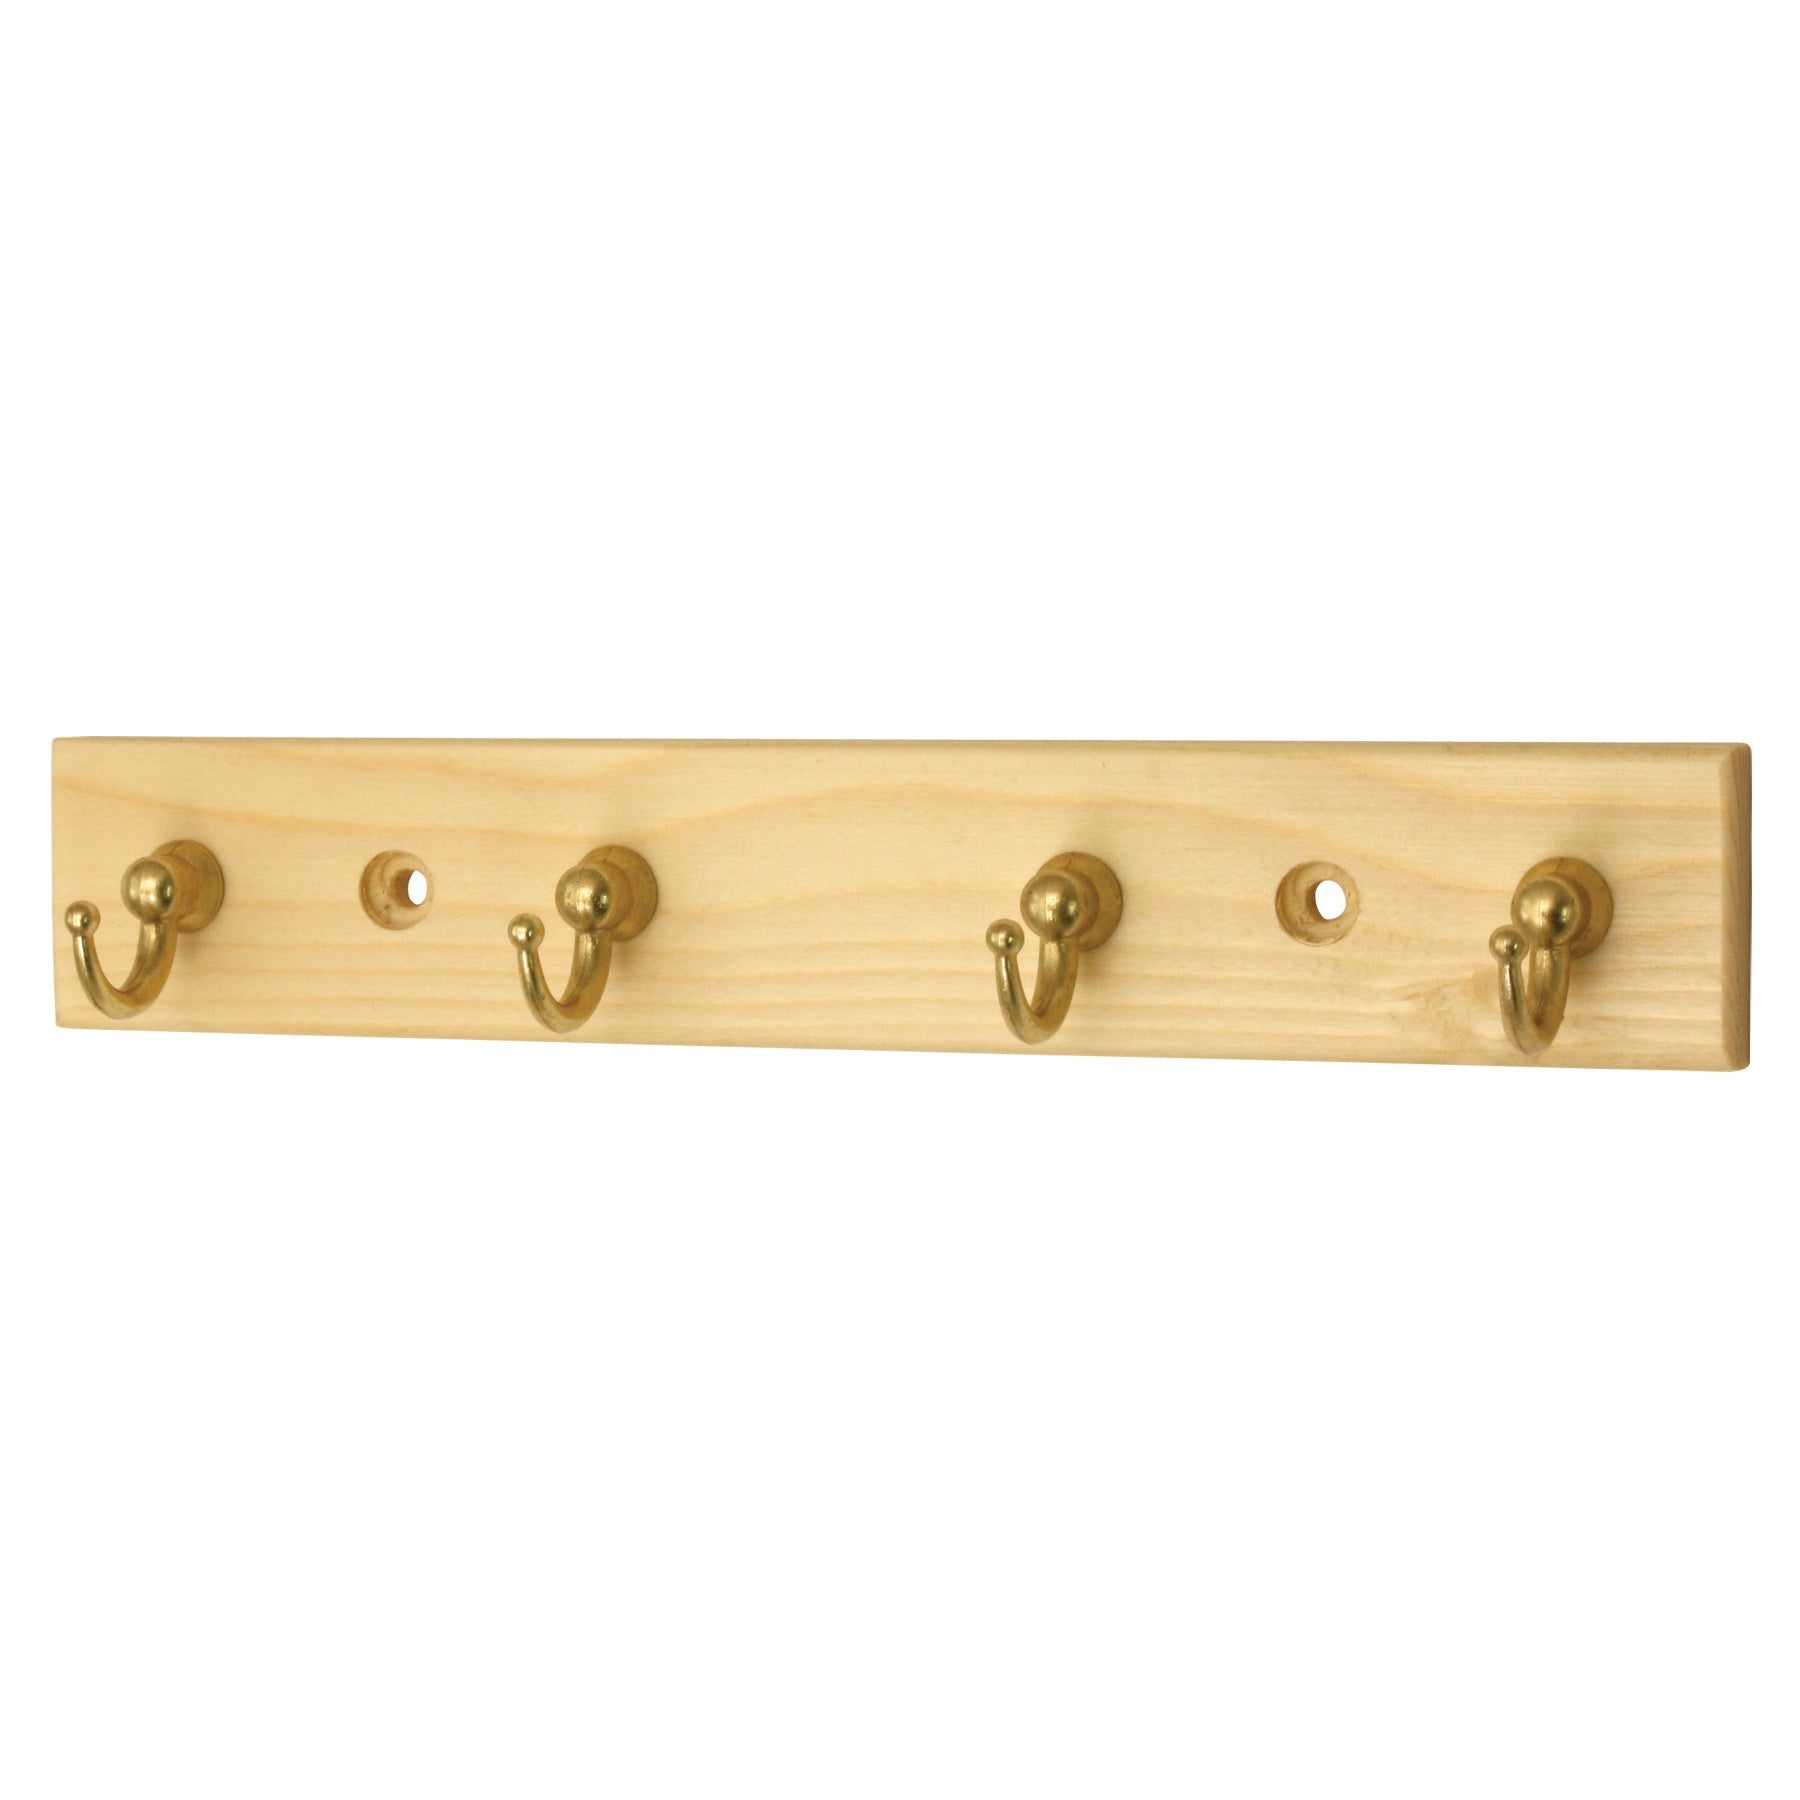 Headbourne HR2204L Enty Hookrail 4 Brass Key Hooks Pine Board - Premium Key Storage from Headbourne - Just $3.50! Shop now at W Hurst & Son (IW) Ltd